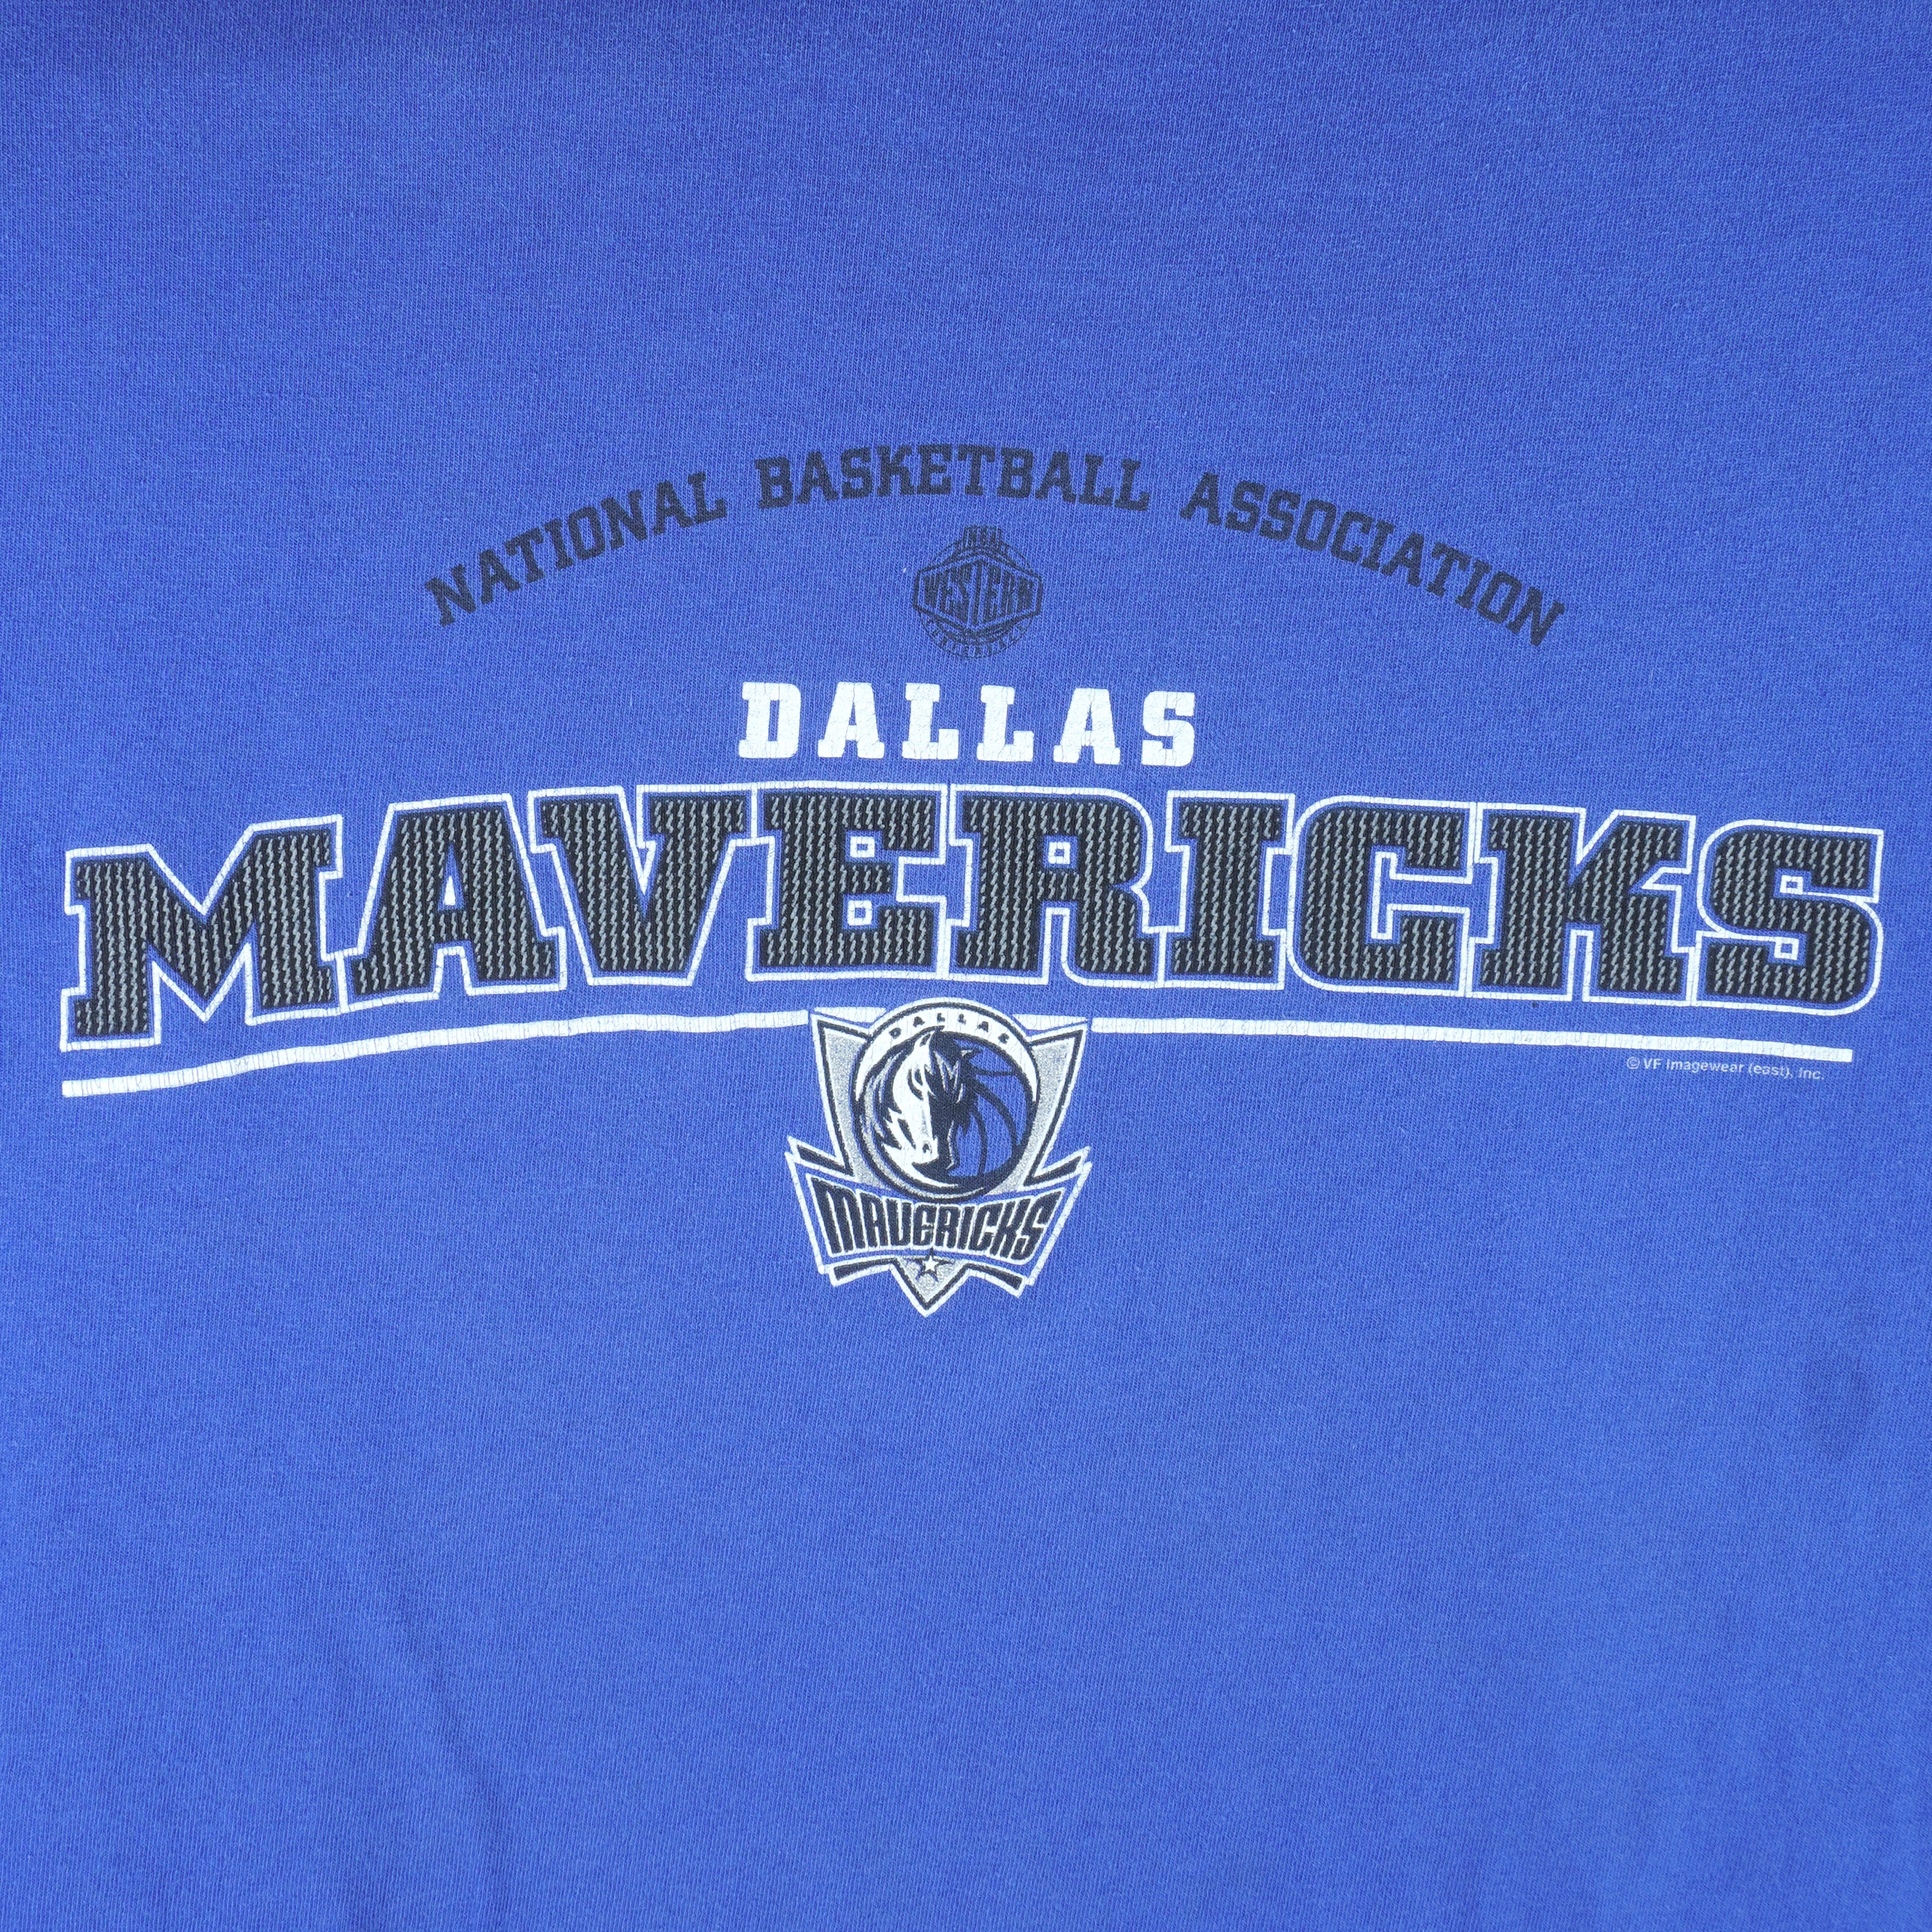 Dallas Mavericks Merchandise, Jerseys, Apparel, Clothing